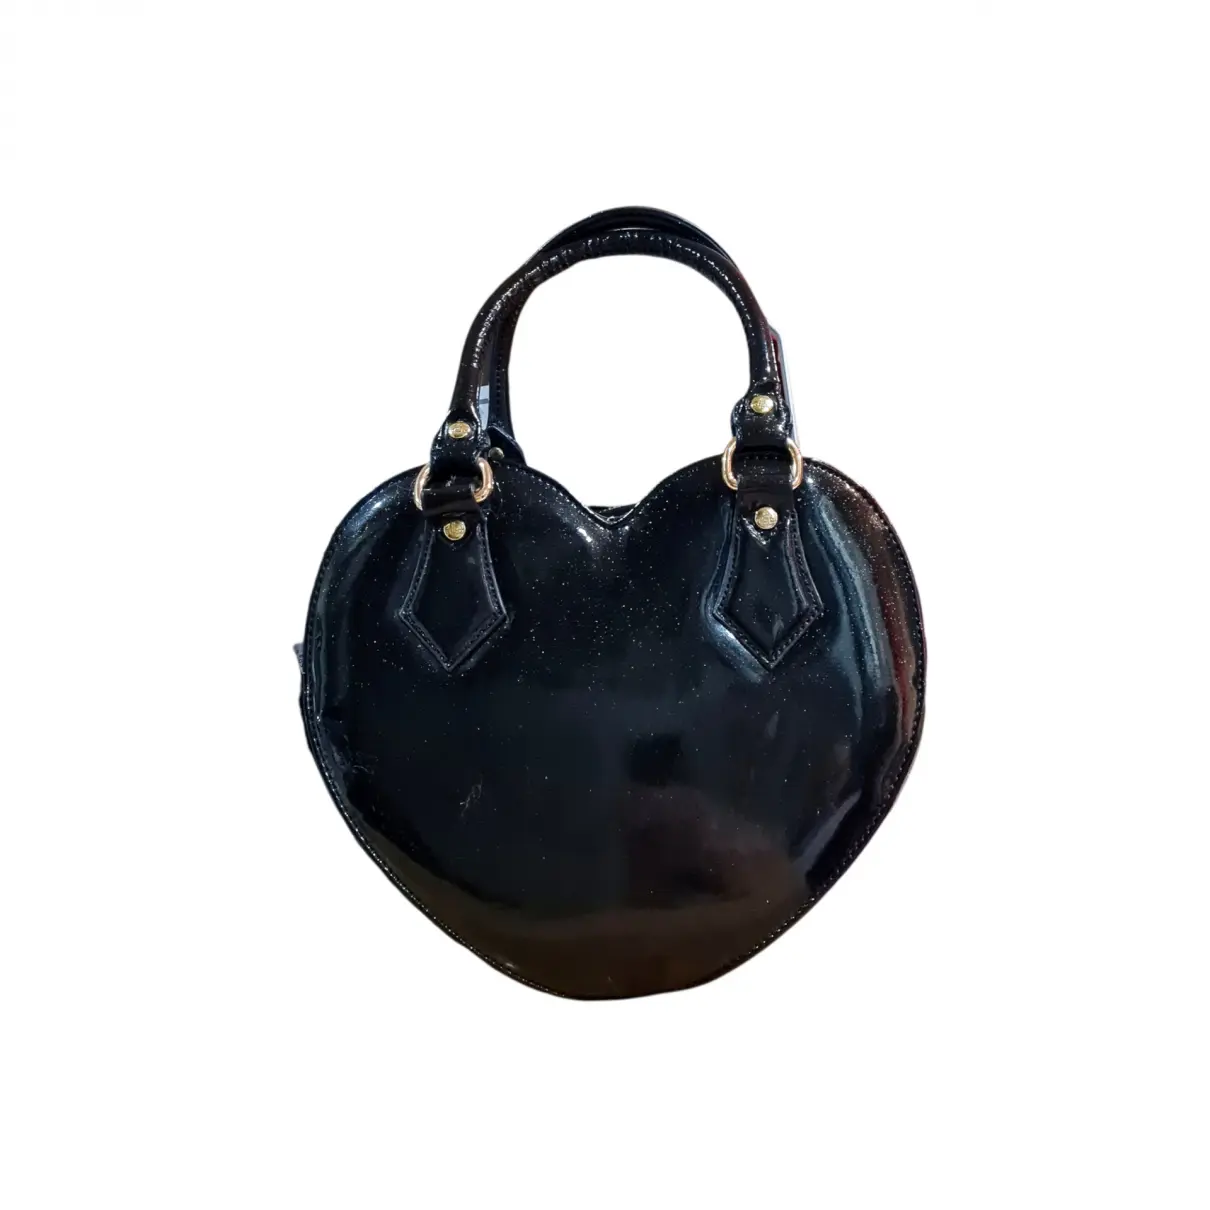 Buy Vivienne Westwood Chancery Heart patent leather handbag online